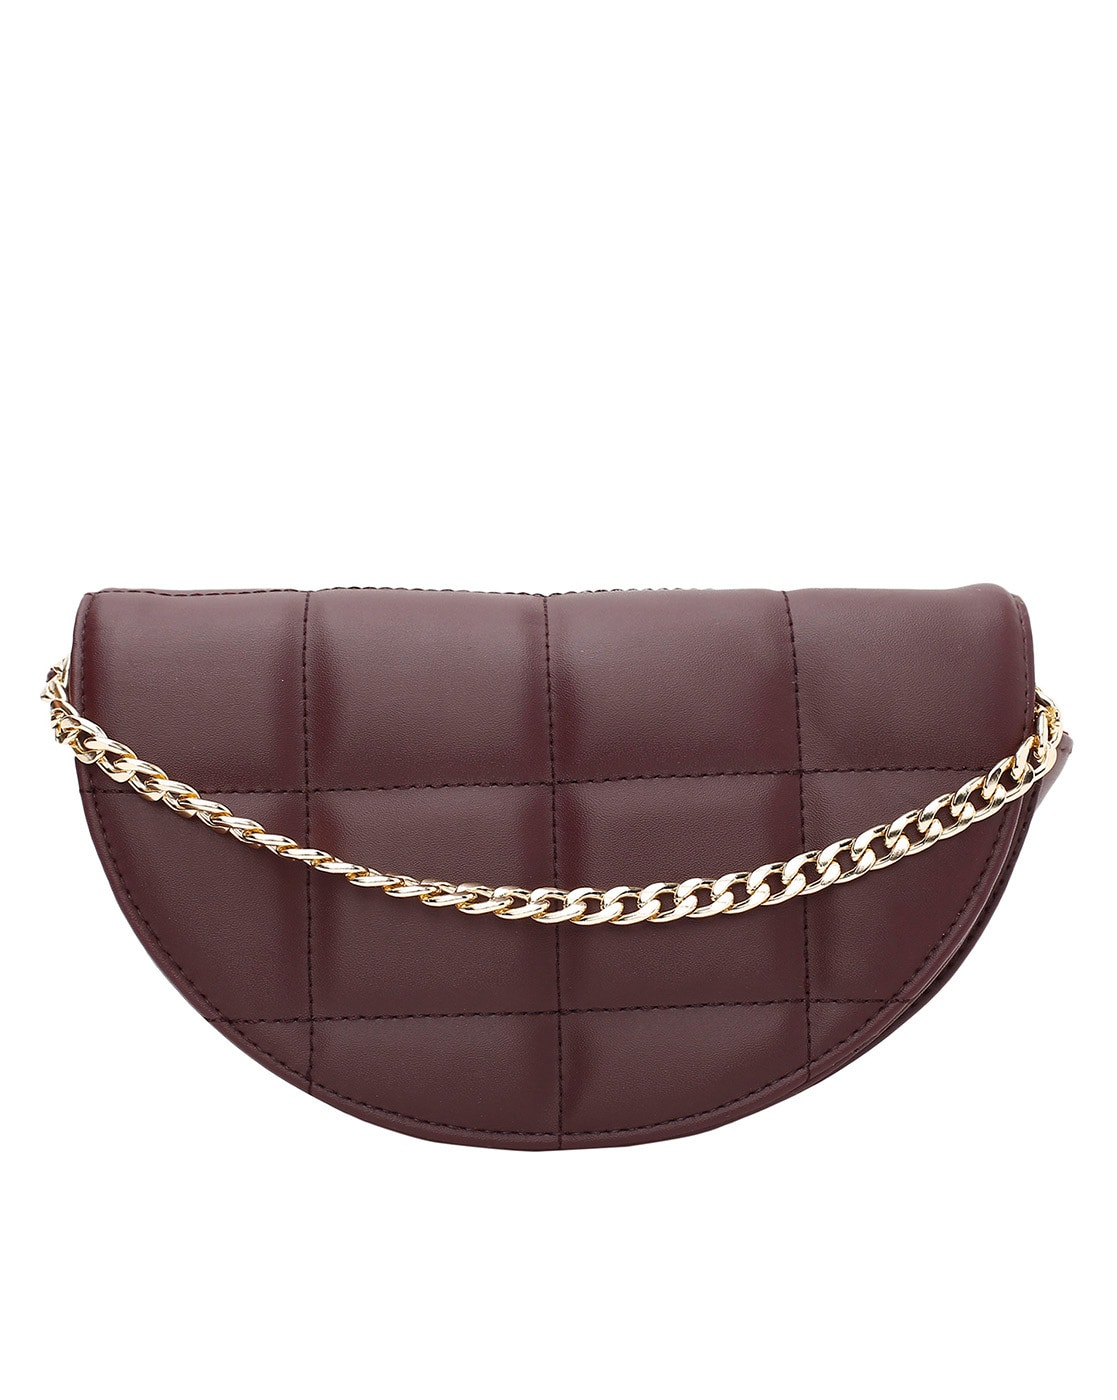 Buy Tan Brown Handbags for Women by MAX Online  Ajiocom